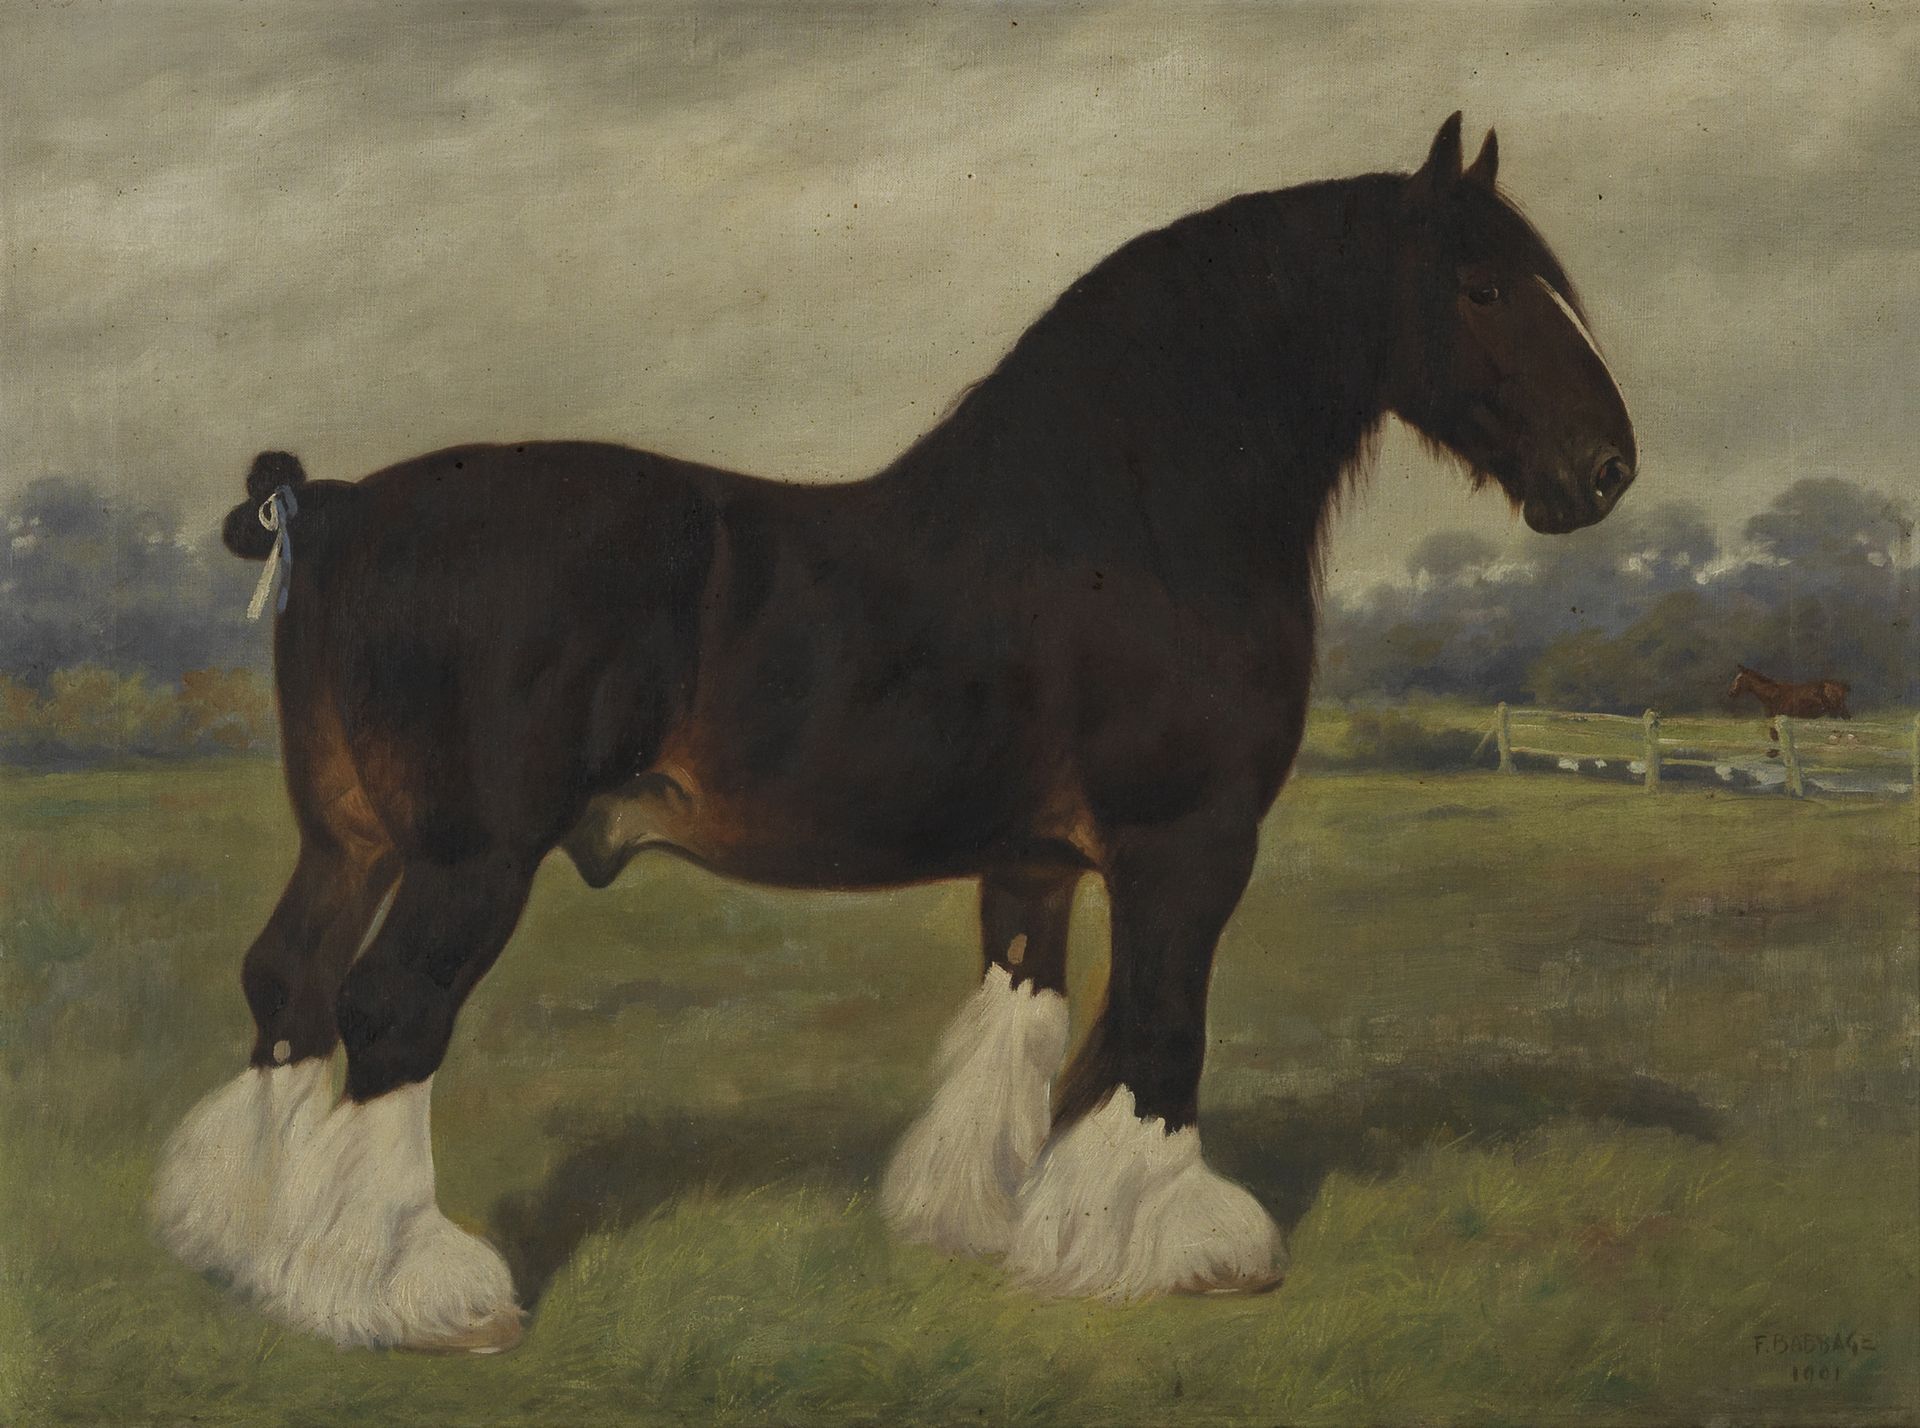 Frank Babbage (British, 1858-1916) The prize shire horse, Knottingley Regent